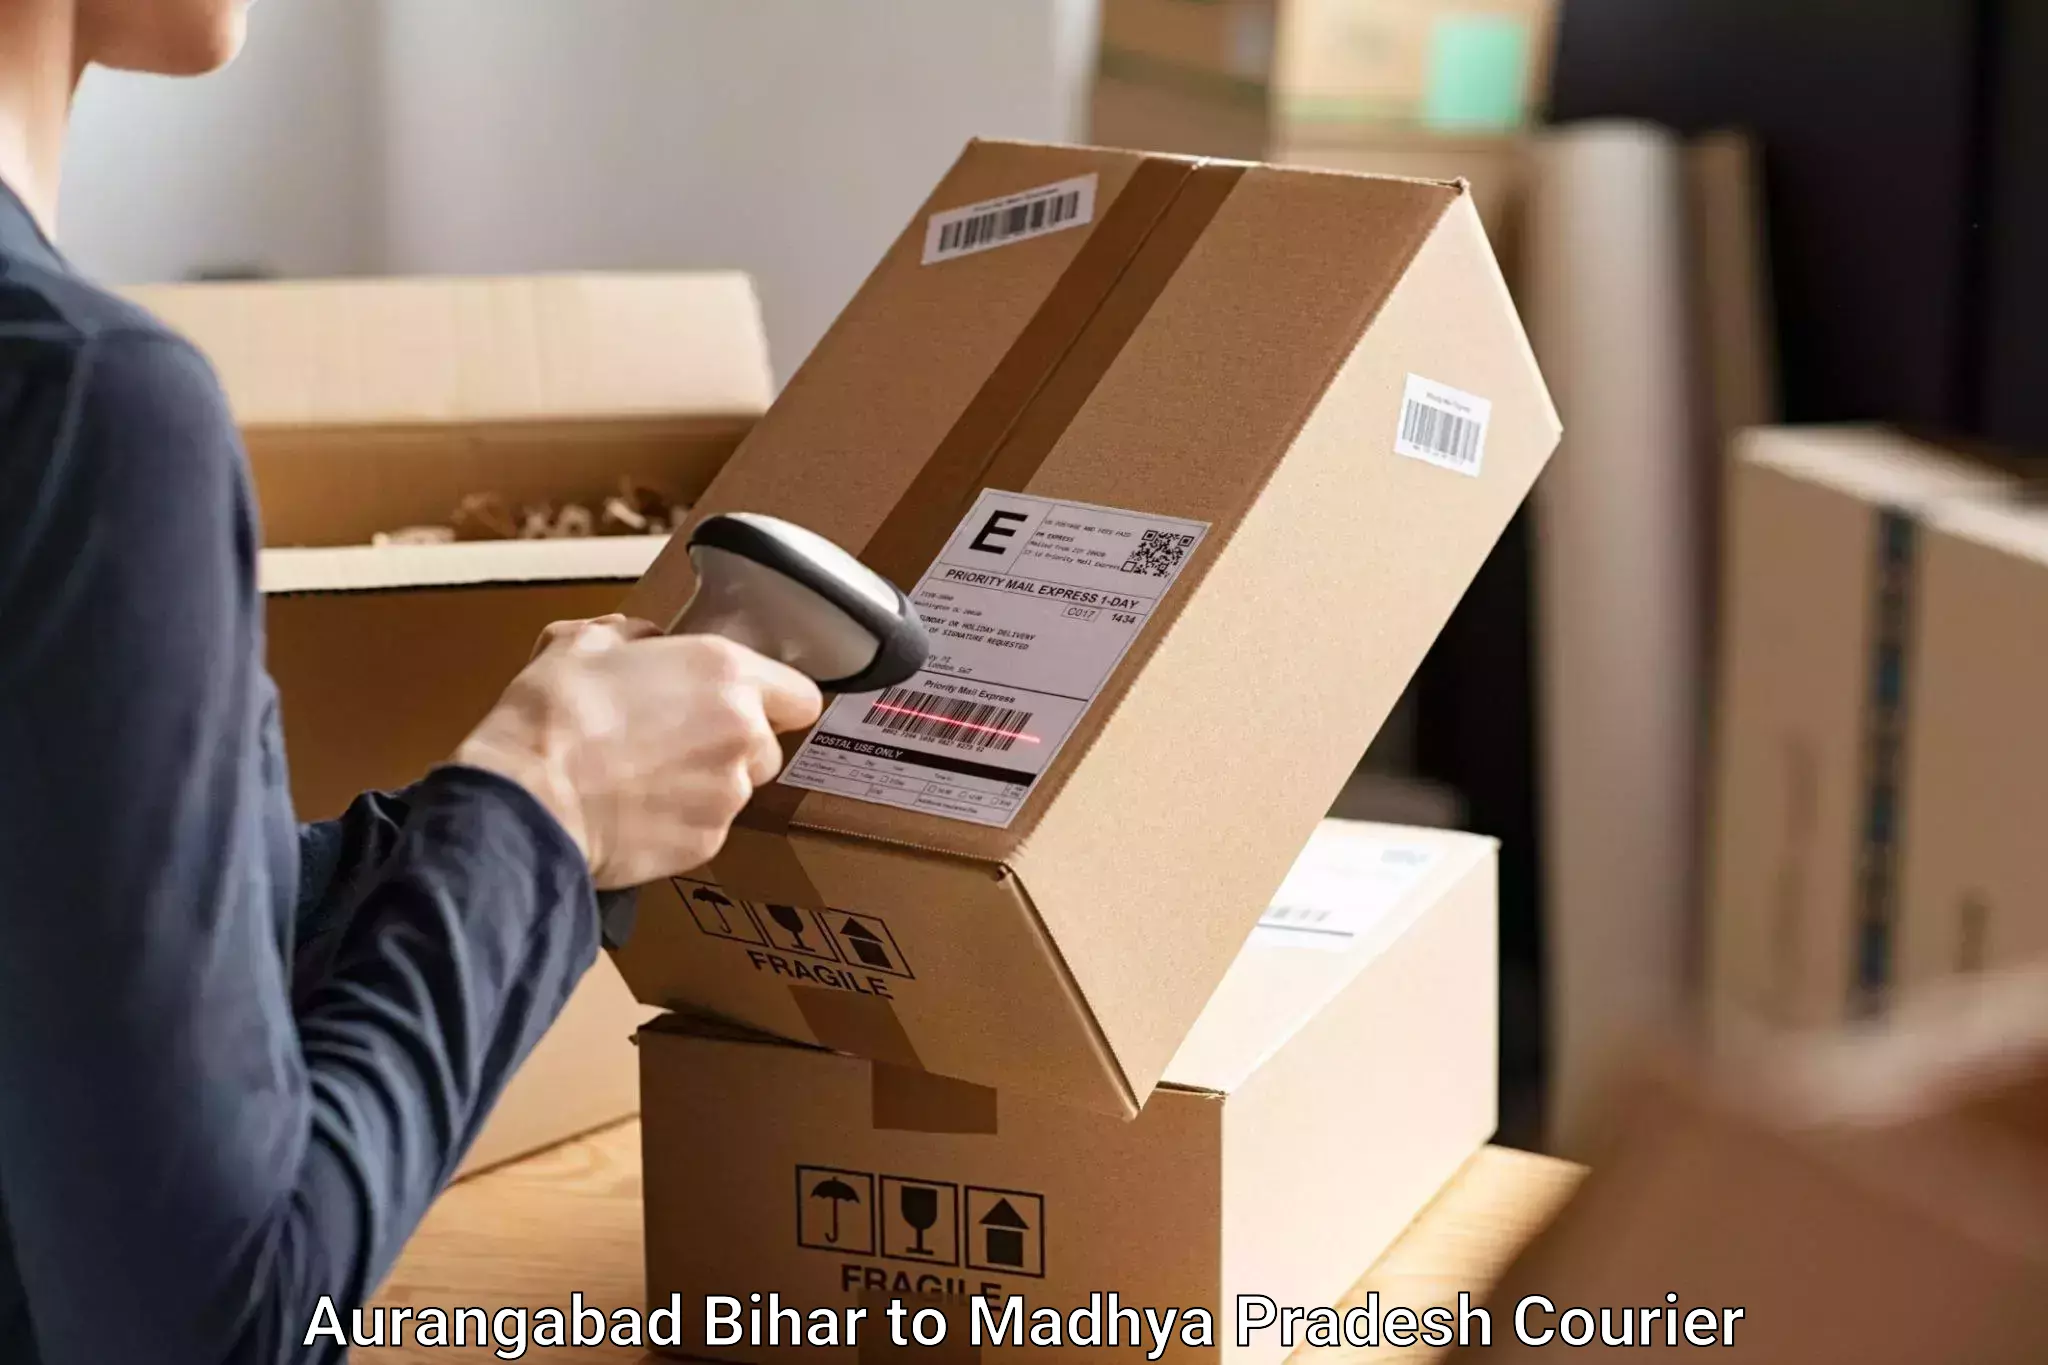 Luggage delivery network Aurangabad Bihar to Madhya Pradesh